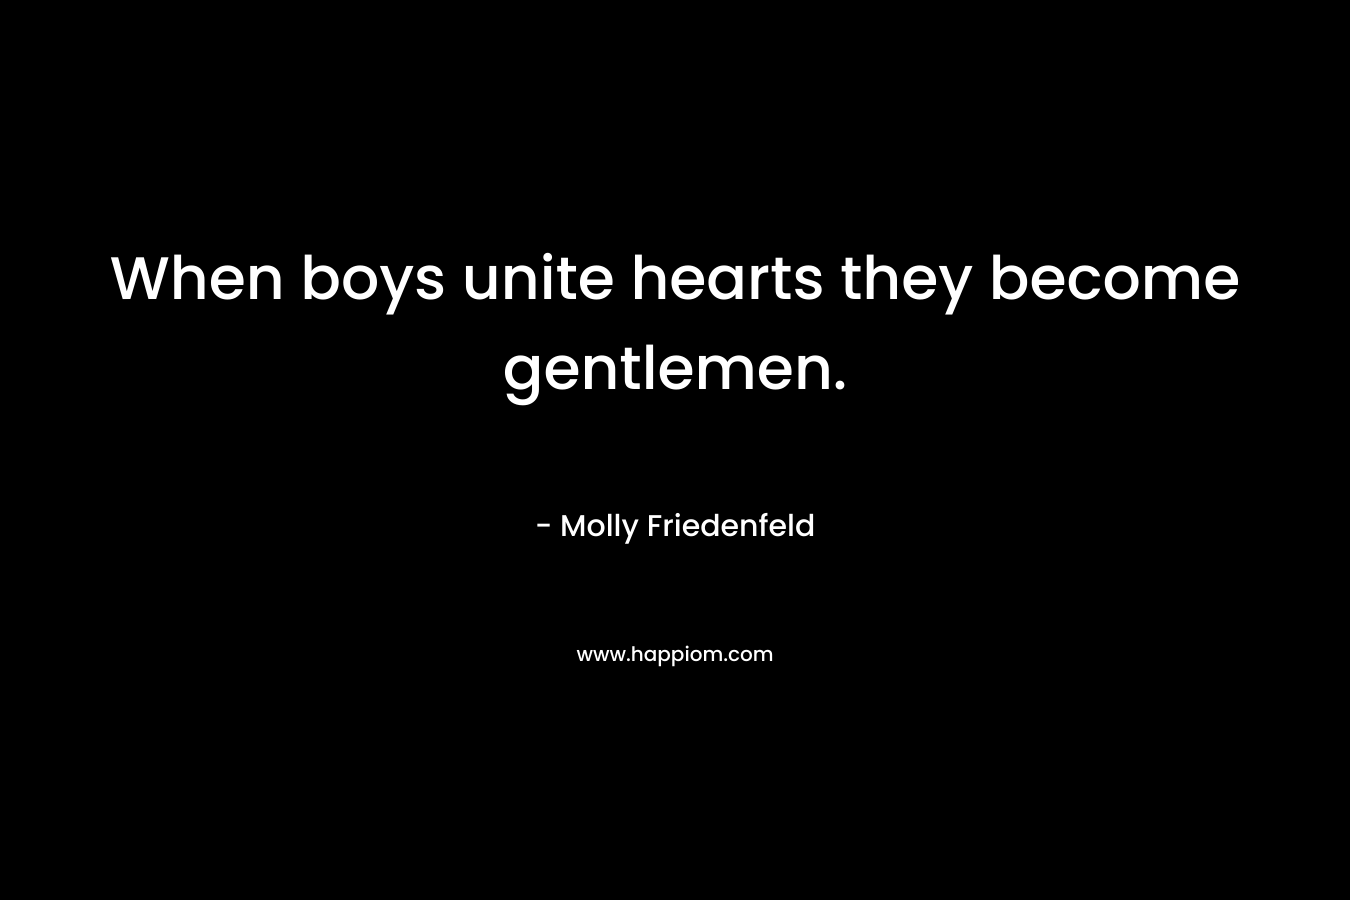 When boys unite hearts they become gentlemen.